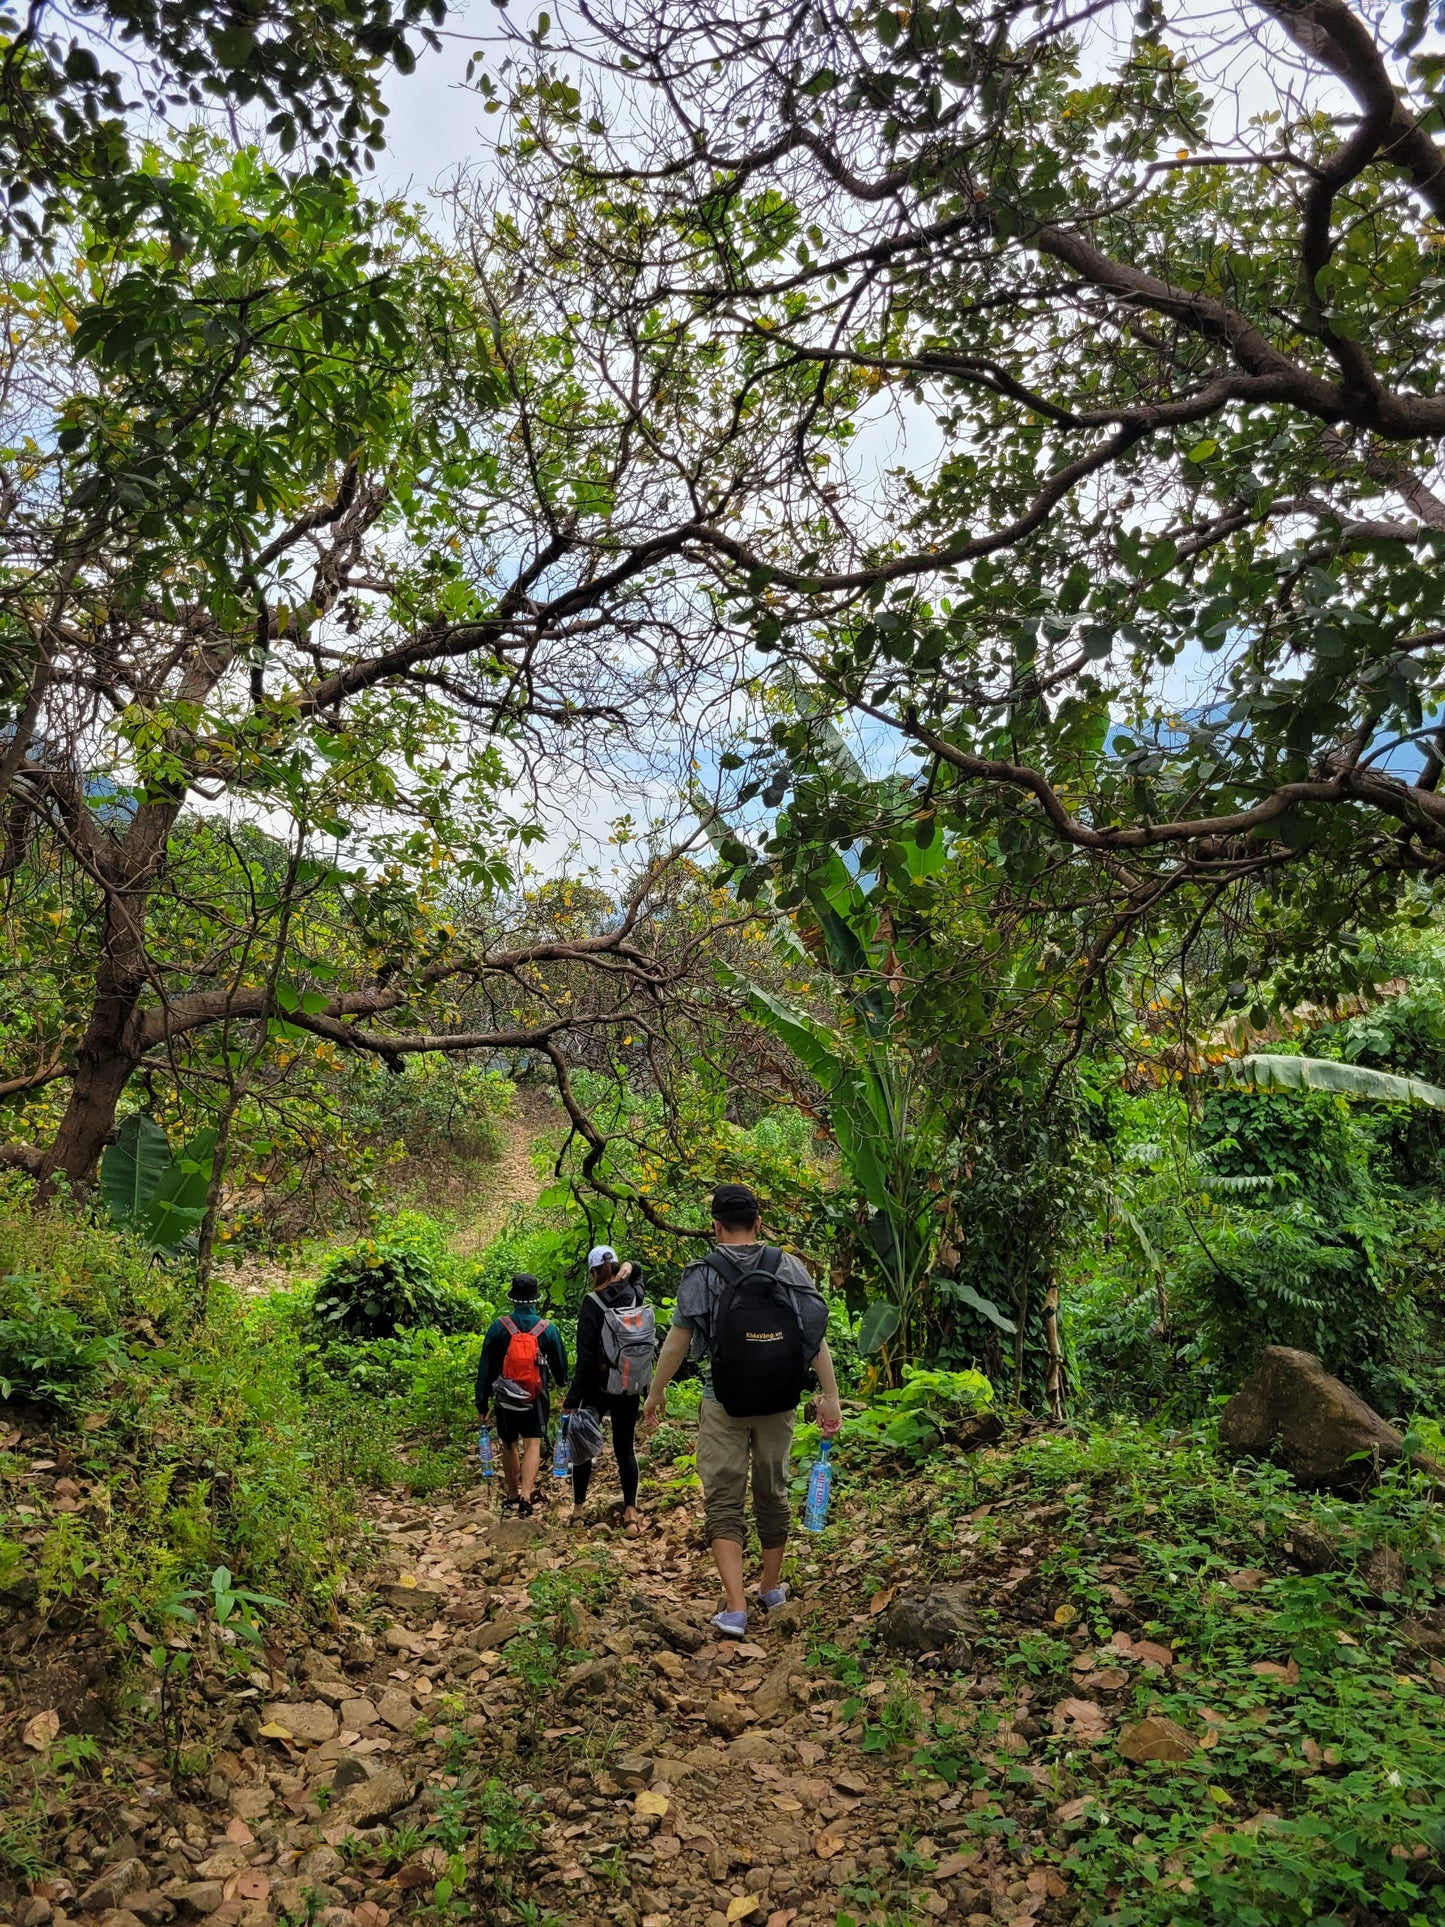 74B: (2일) Madagui 모험: 신비한 숲 발견